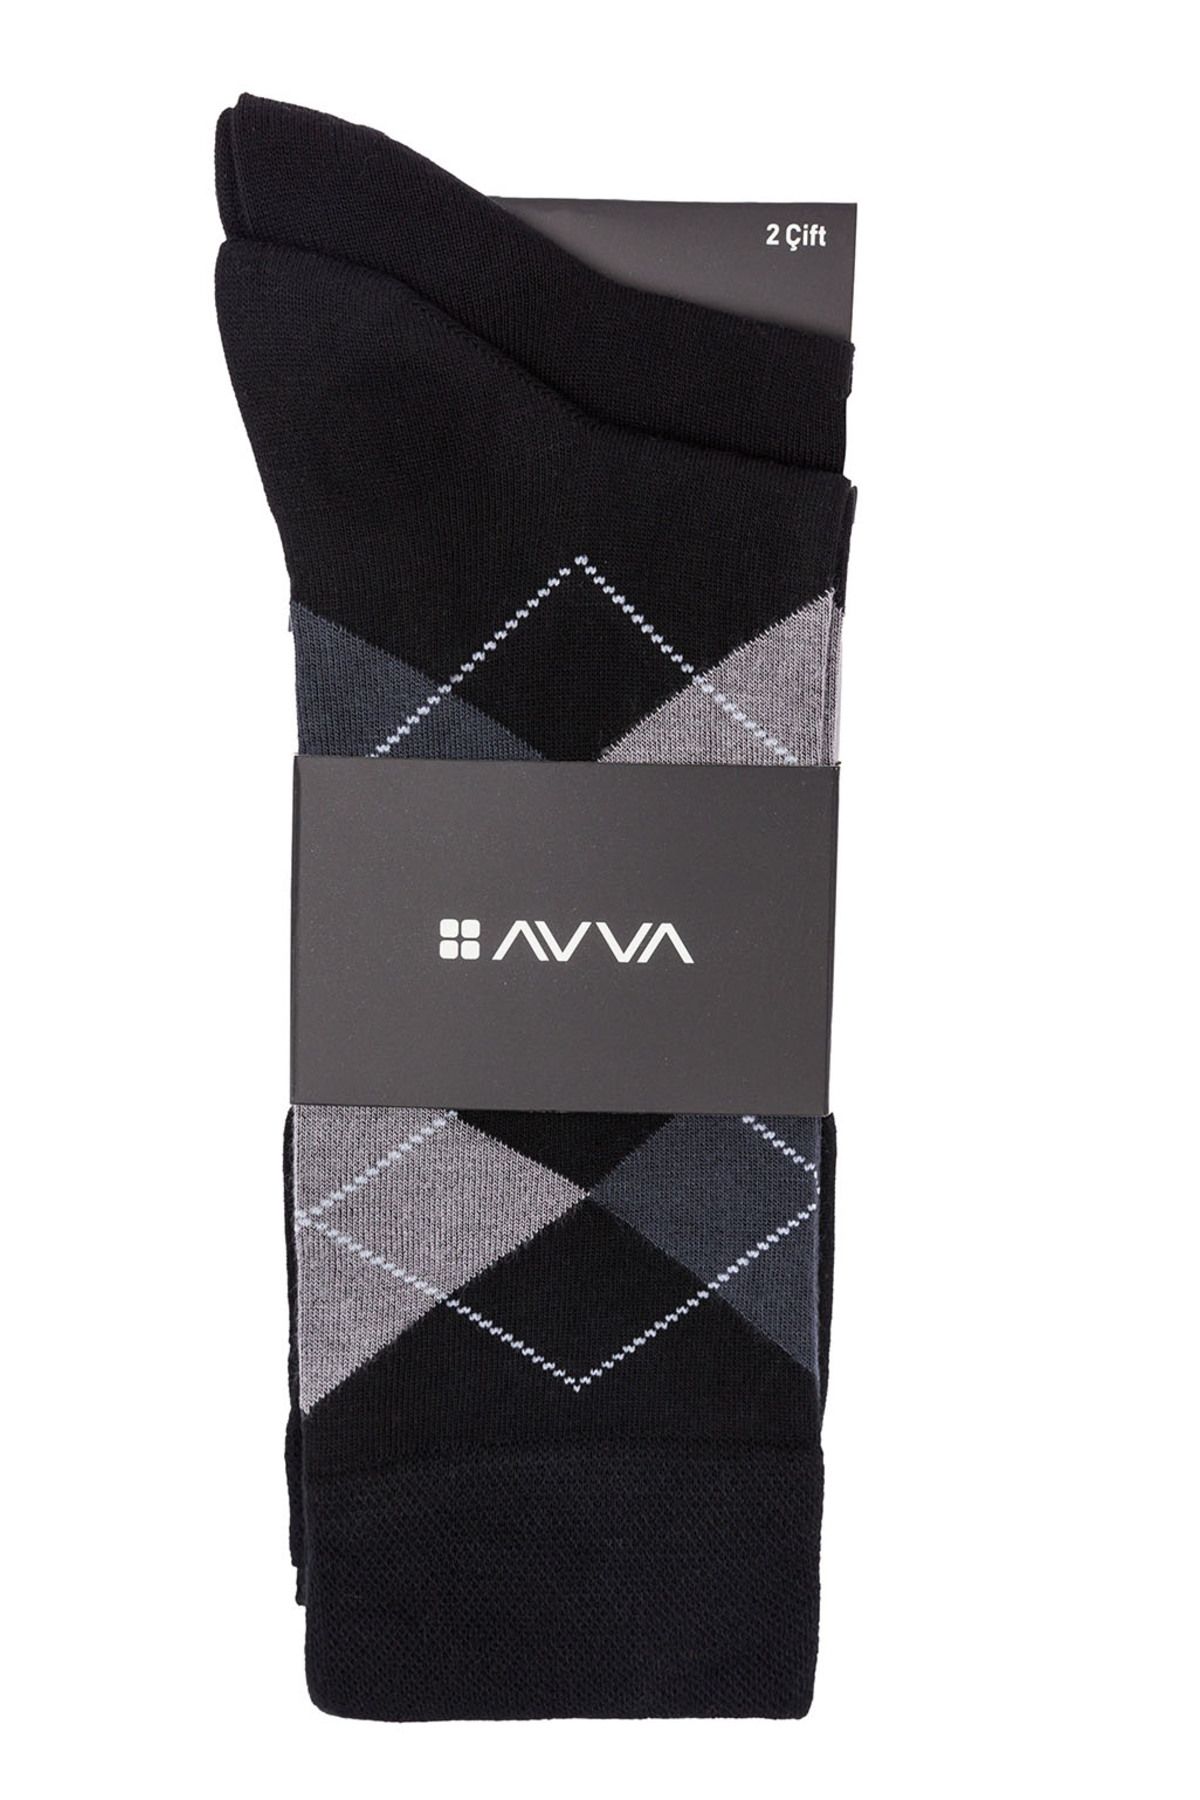 Avva Erkek Siyah Desenli 2'li Soket Çorap A31y8502